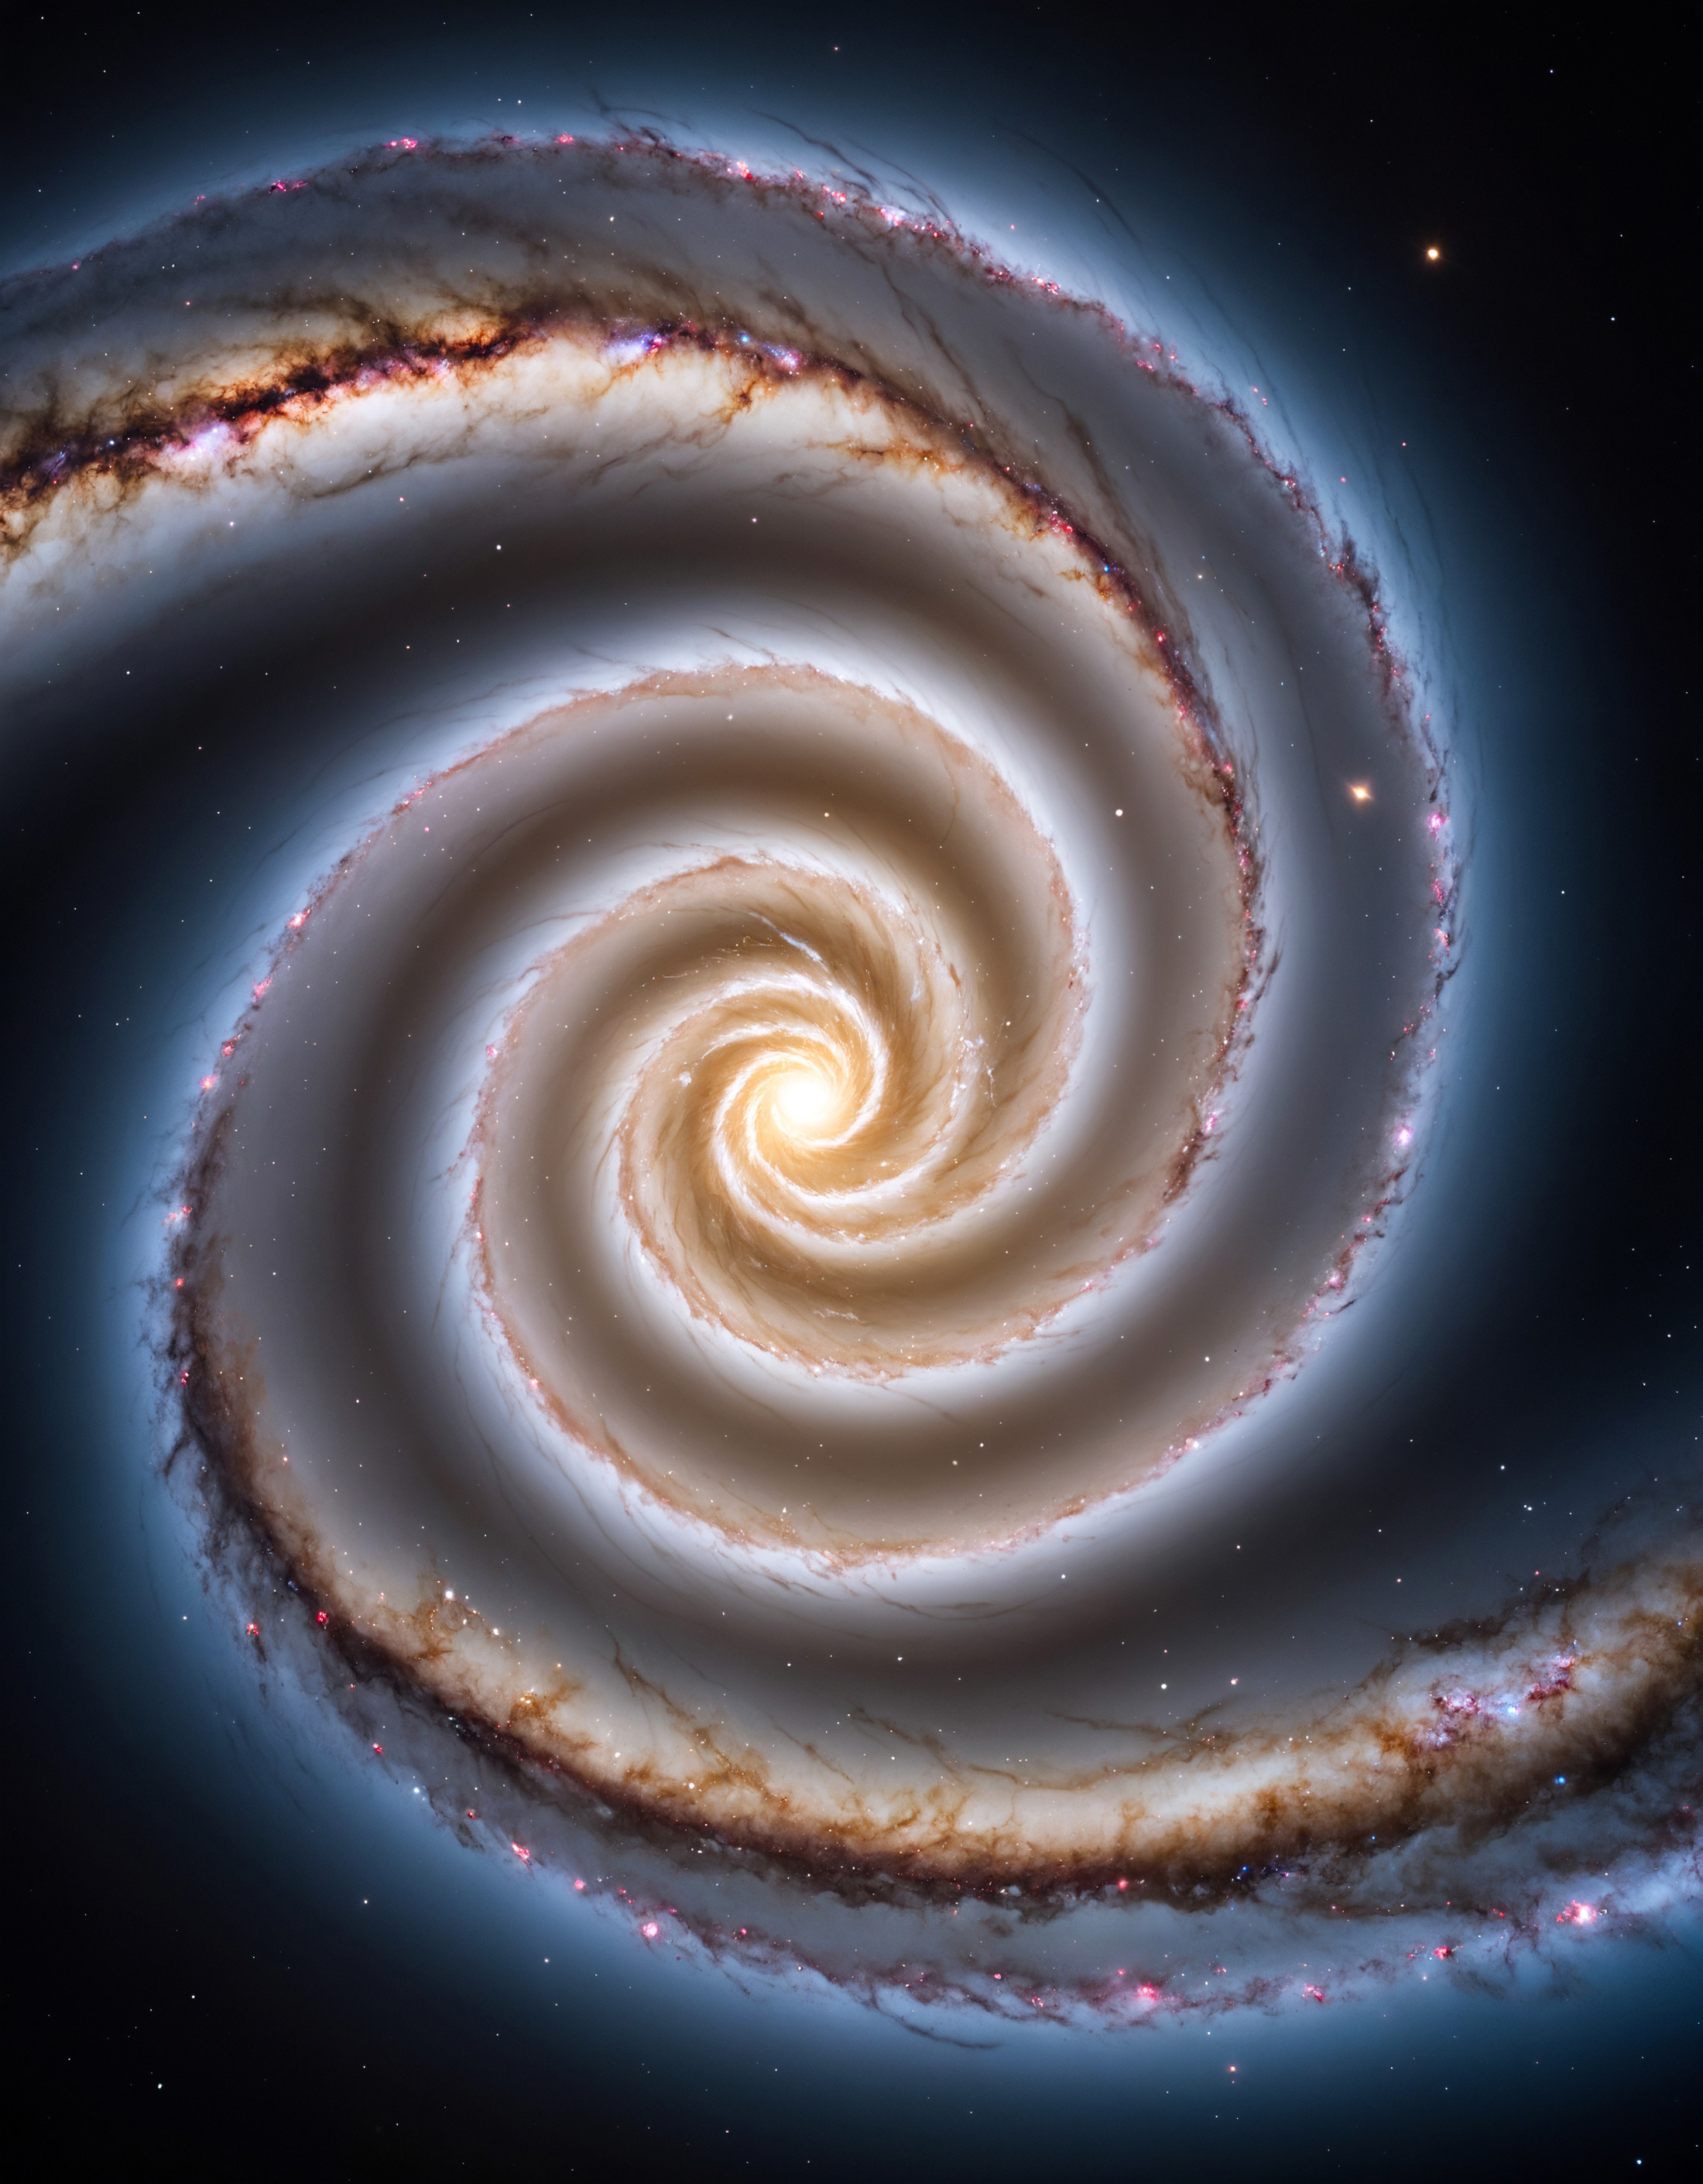 award winning photo of a majestic spiral galaxy in space, zavy-lghttrl, atmospheric haze, dynamic angle, cinematic still, ...